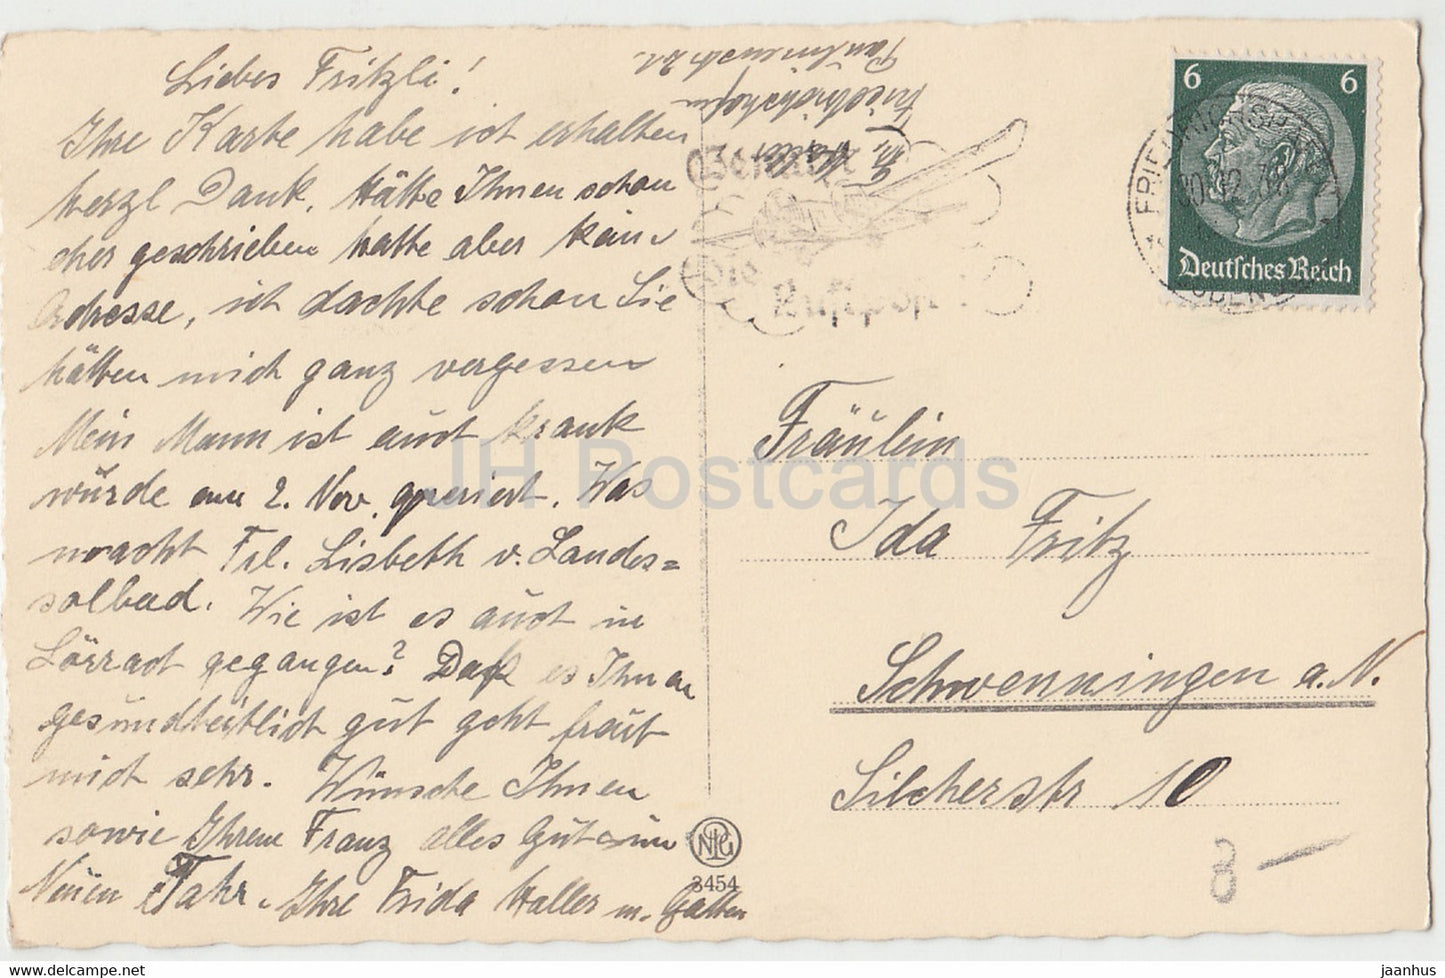 New Year Greeting Card - Herzliche Neujahrsgrusse - deer - forest - NPG 3454 - old postcard - 1938 - Germany - used